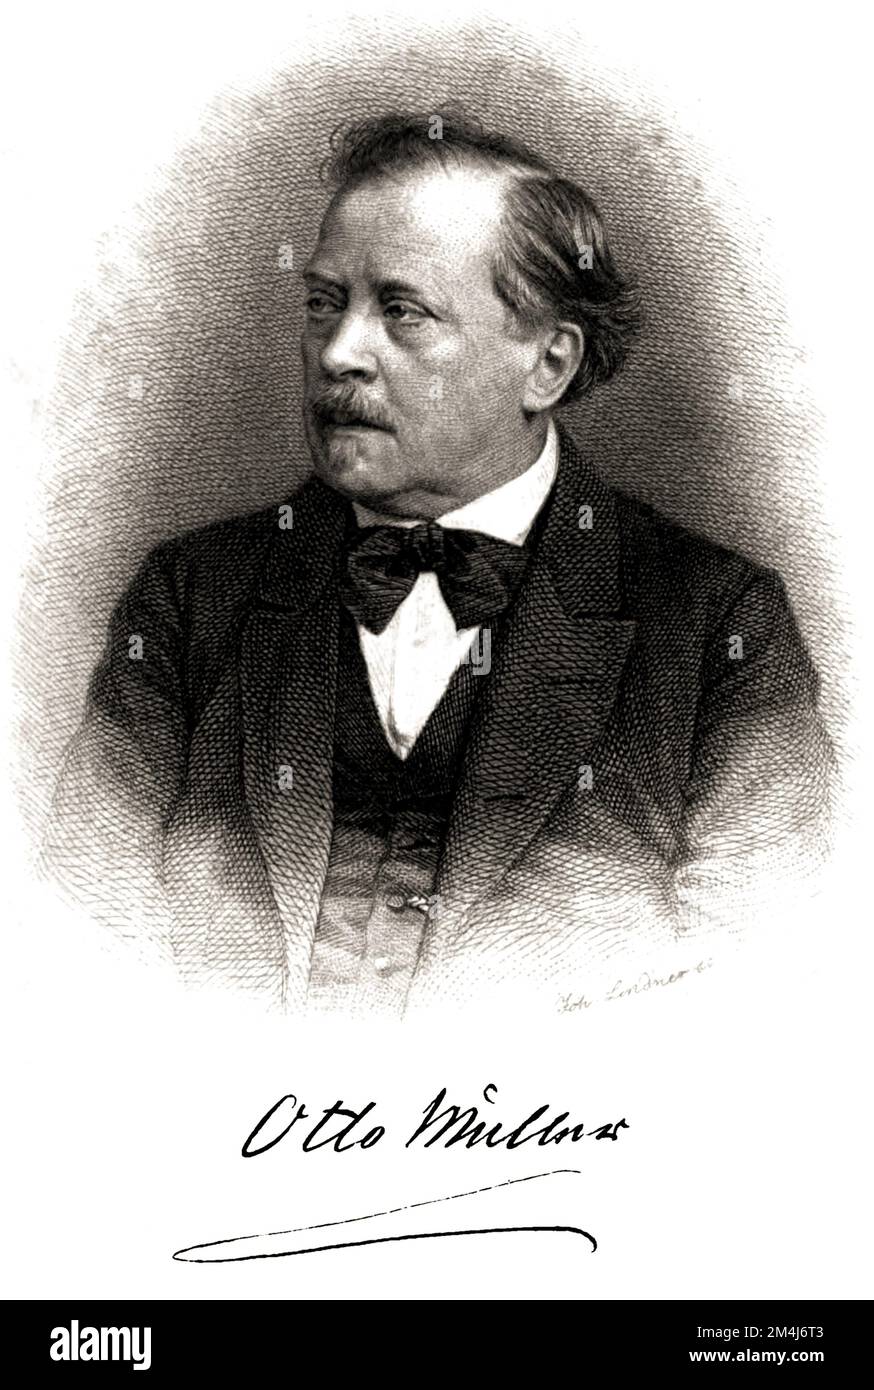 1873 CA, ALLEMAGNE : l'écrivain et romancier allemand OTTO MUELLER ( Müller, 1816 - 1894 ) . Portrait par le graveur JOHANN LINDER . - HISTOIRE - FOTO STORICHE - PORTRAIT - RITRATTO - SCRITTORE - LETTERATURA - LITTÉRATURE - letterato - ritratto - portrait - '800 - 800 - OTTOCENTO - noeud papillon - papilon - fiocco - cravatta - gilet - bachigi - moustache - ILLUSTRAZIONE - ILLUSTRATION - CISINIONE - GRAVURE - AUTOGRAFO - FIRMA - SIGNATURE - AUTOGRAPH --- ARCHIVIO GBB Banque D'Images